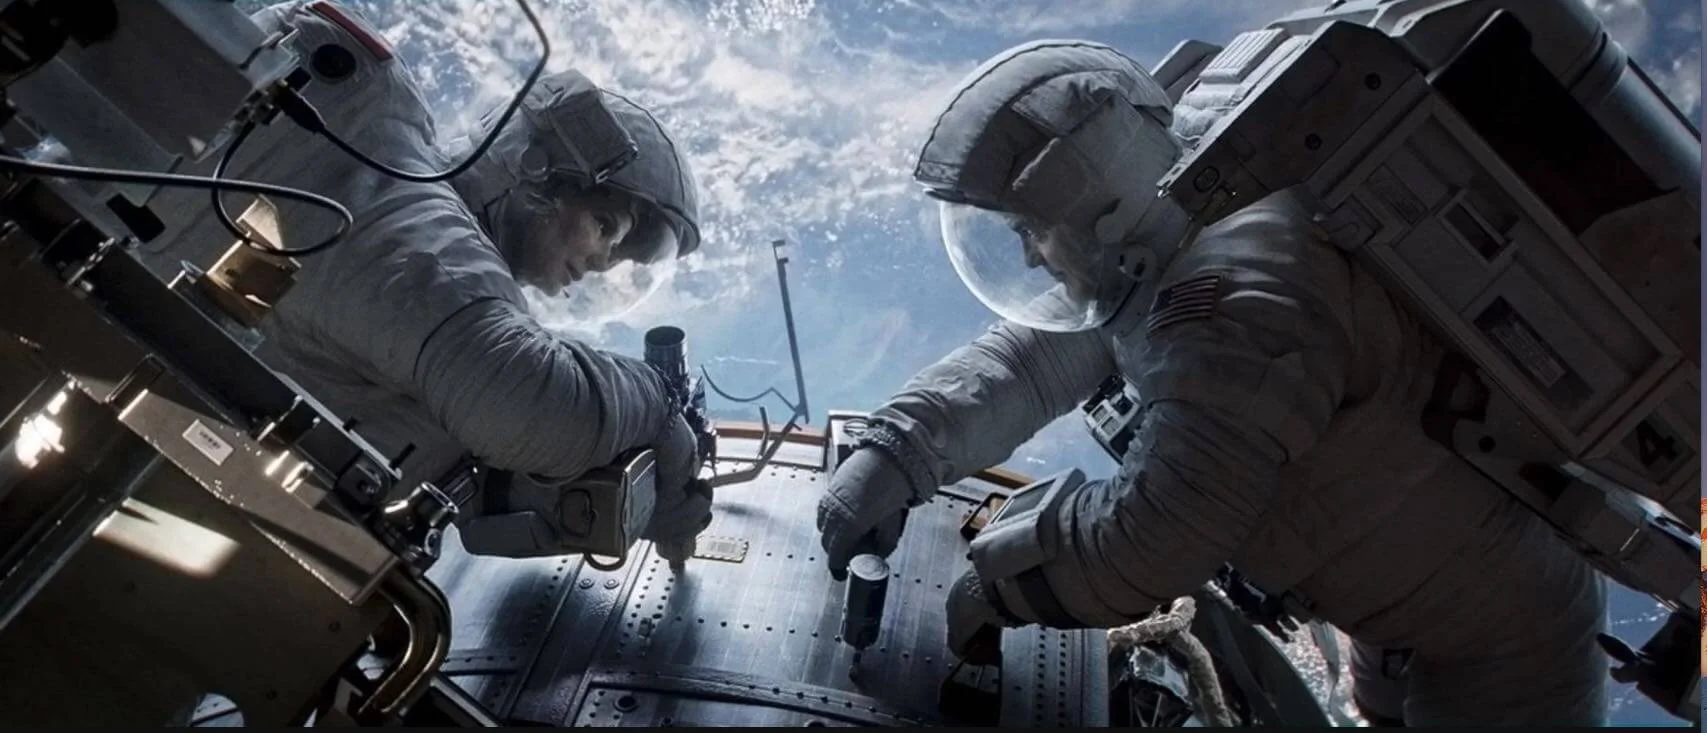 Alfonso Cuaron Movies - Gravity Opening Scene